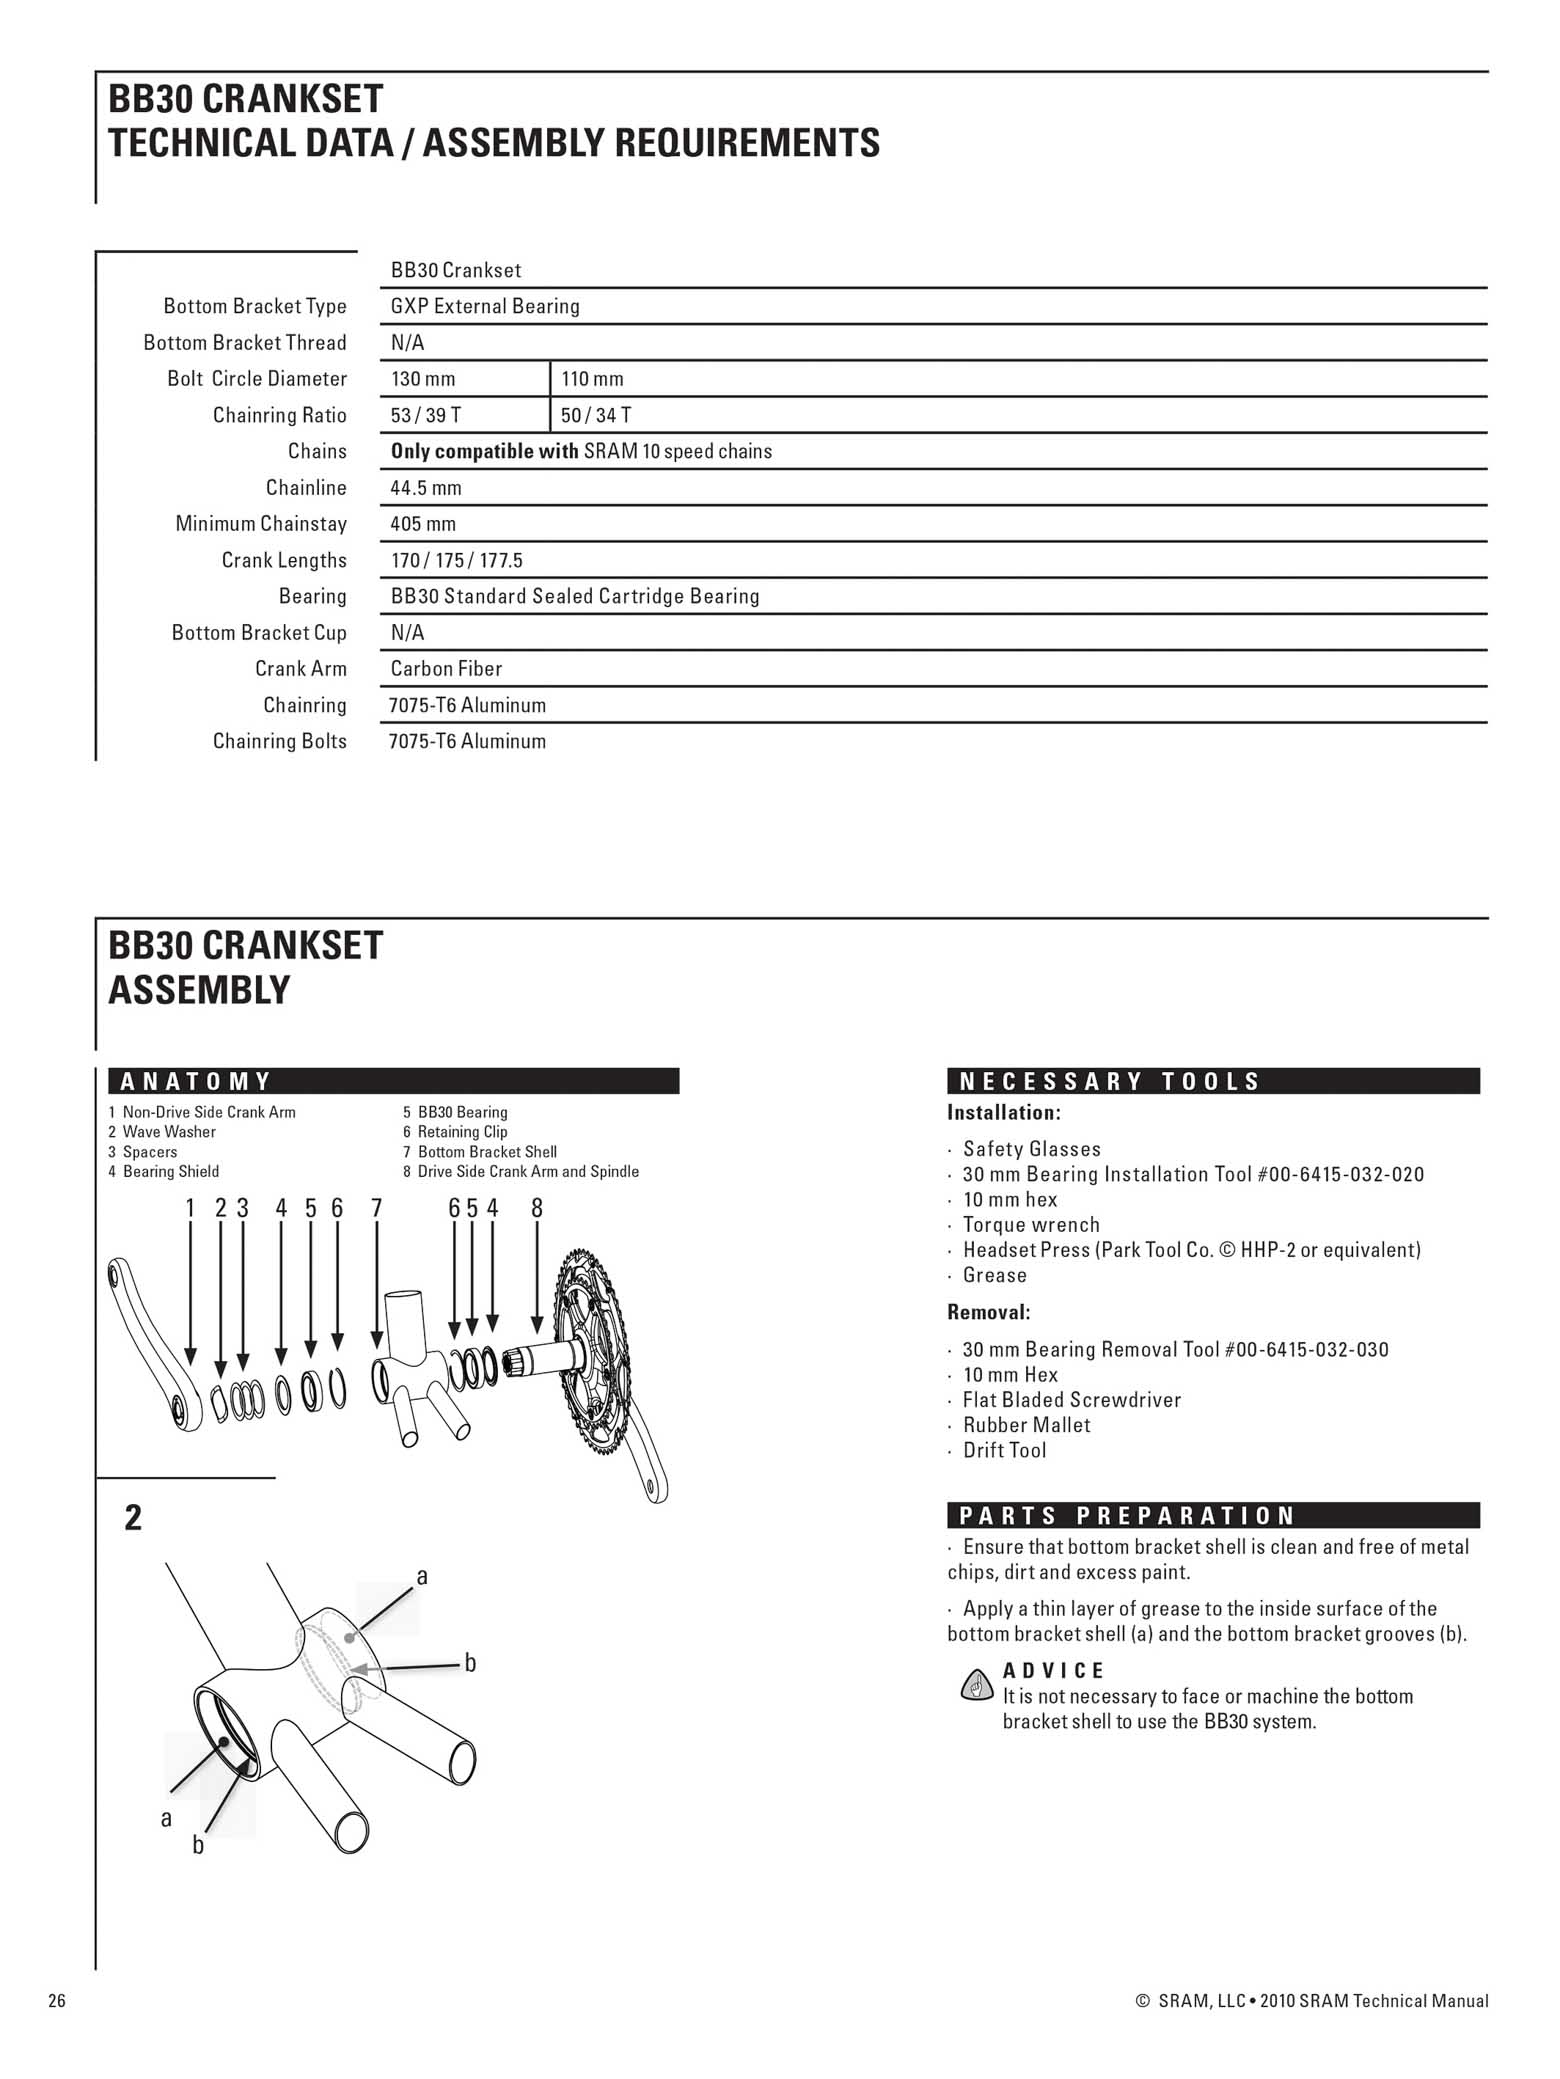 SRAM Technical Manual 2010 page 026 main image